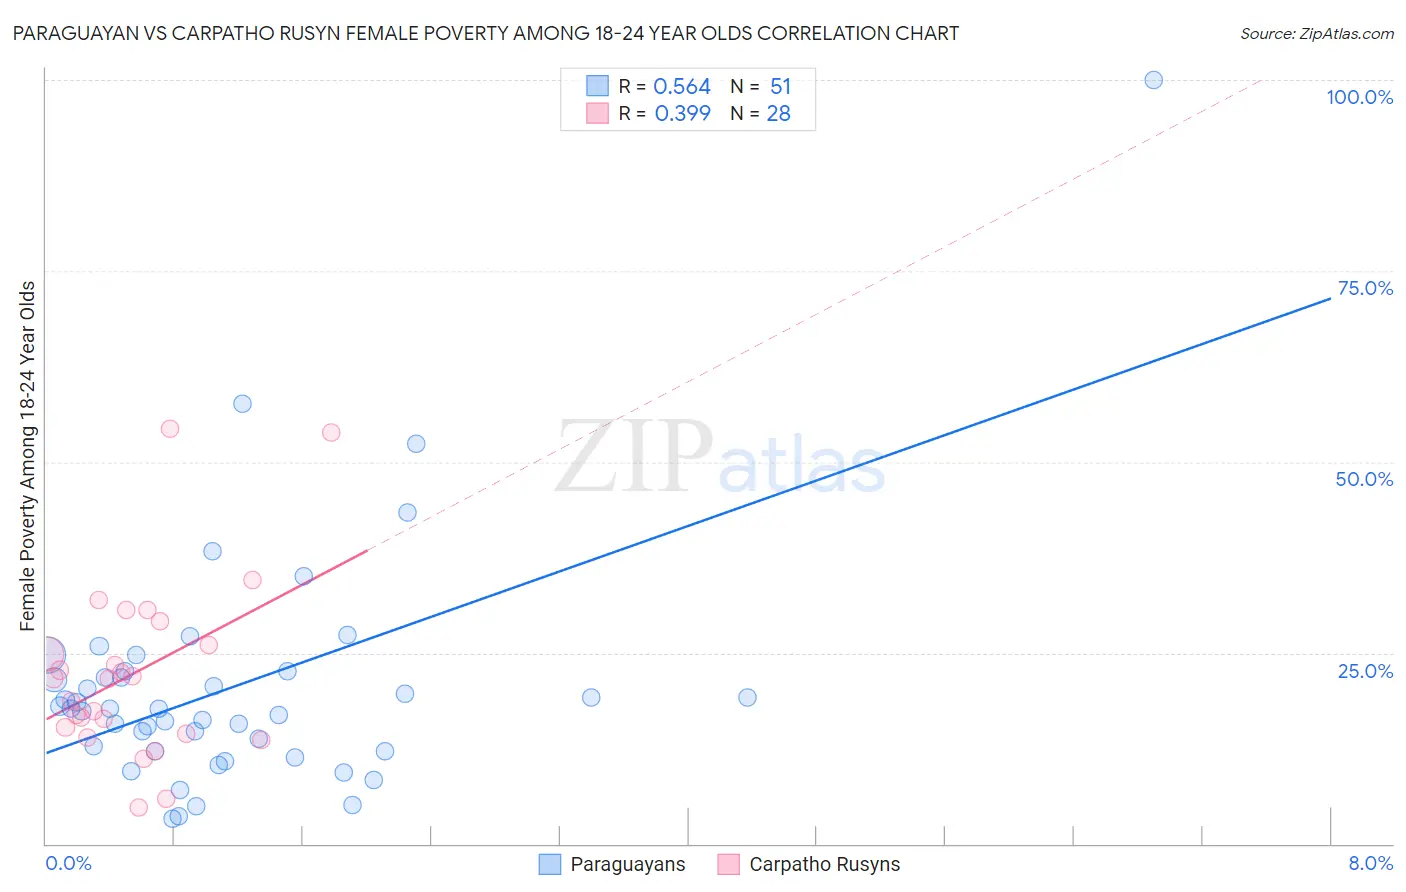 Paraguayan vs Carpatho Rusyn Female Poverty Among 18-24 Year Olds